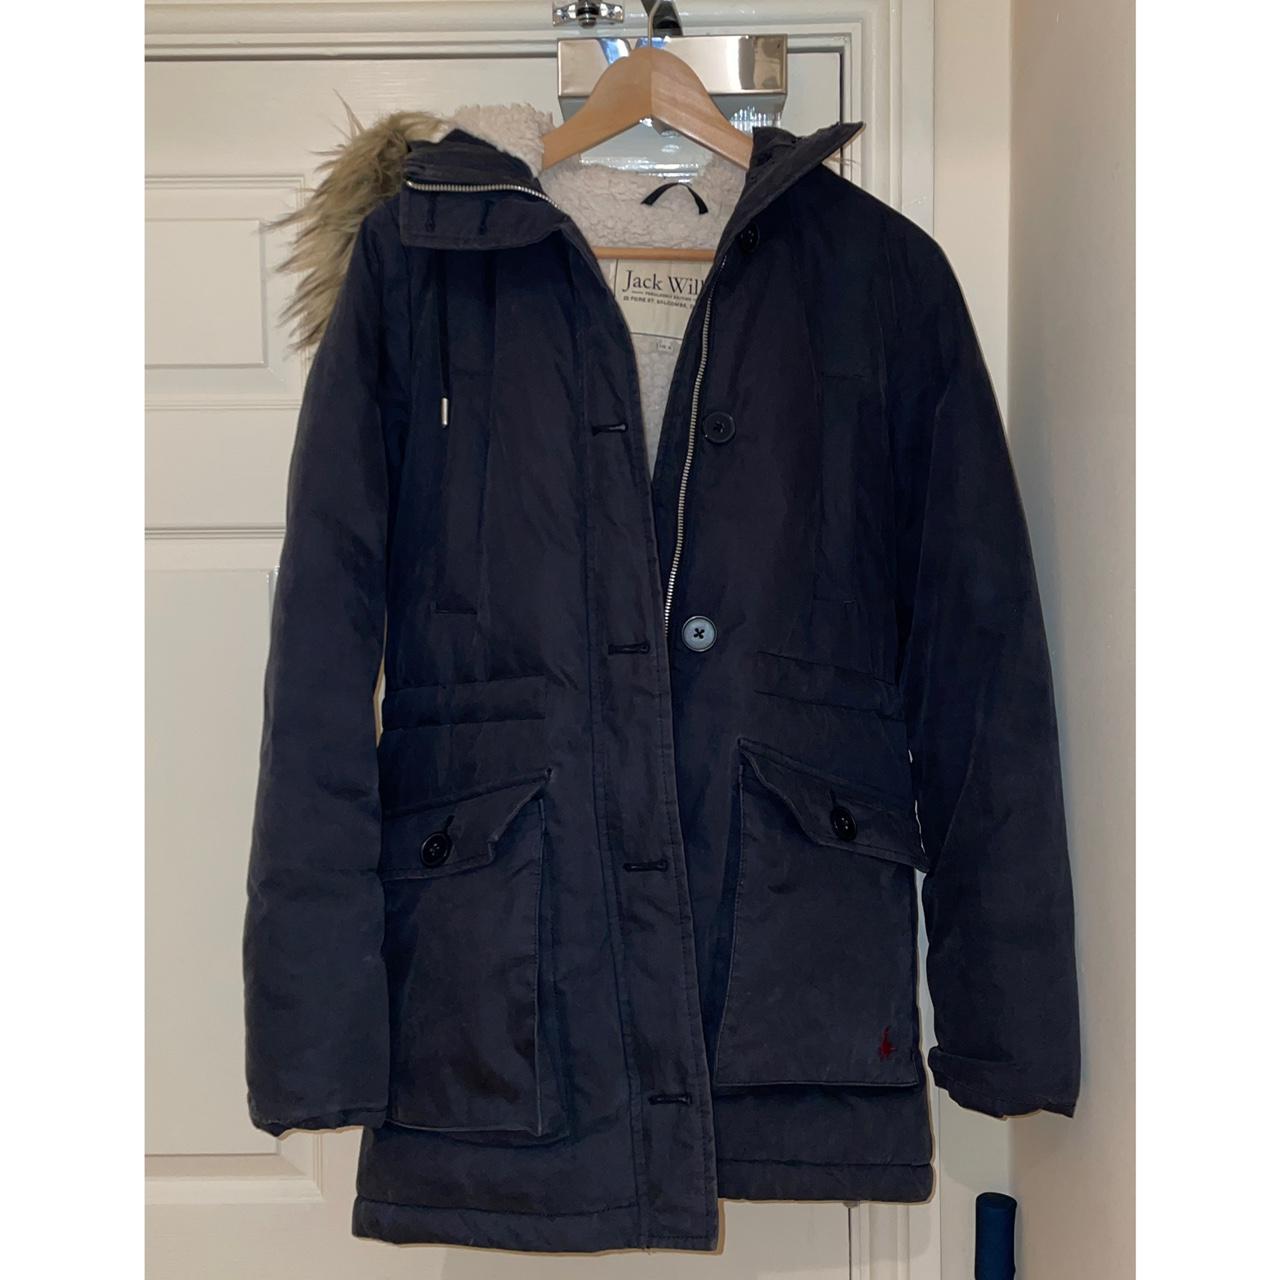 Jack Wills fleece lined navy parka jacket - size 10.... - Depop